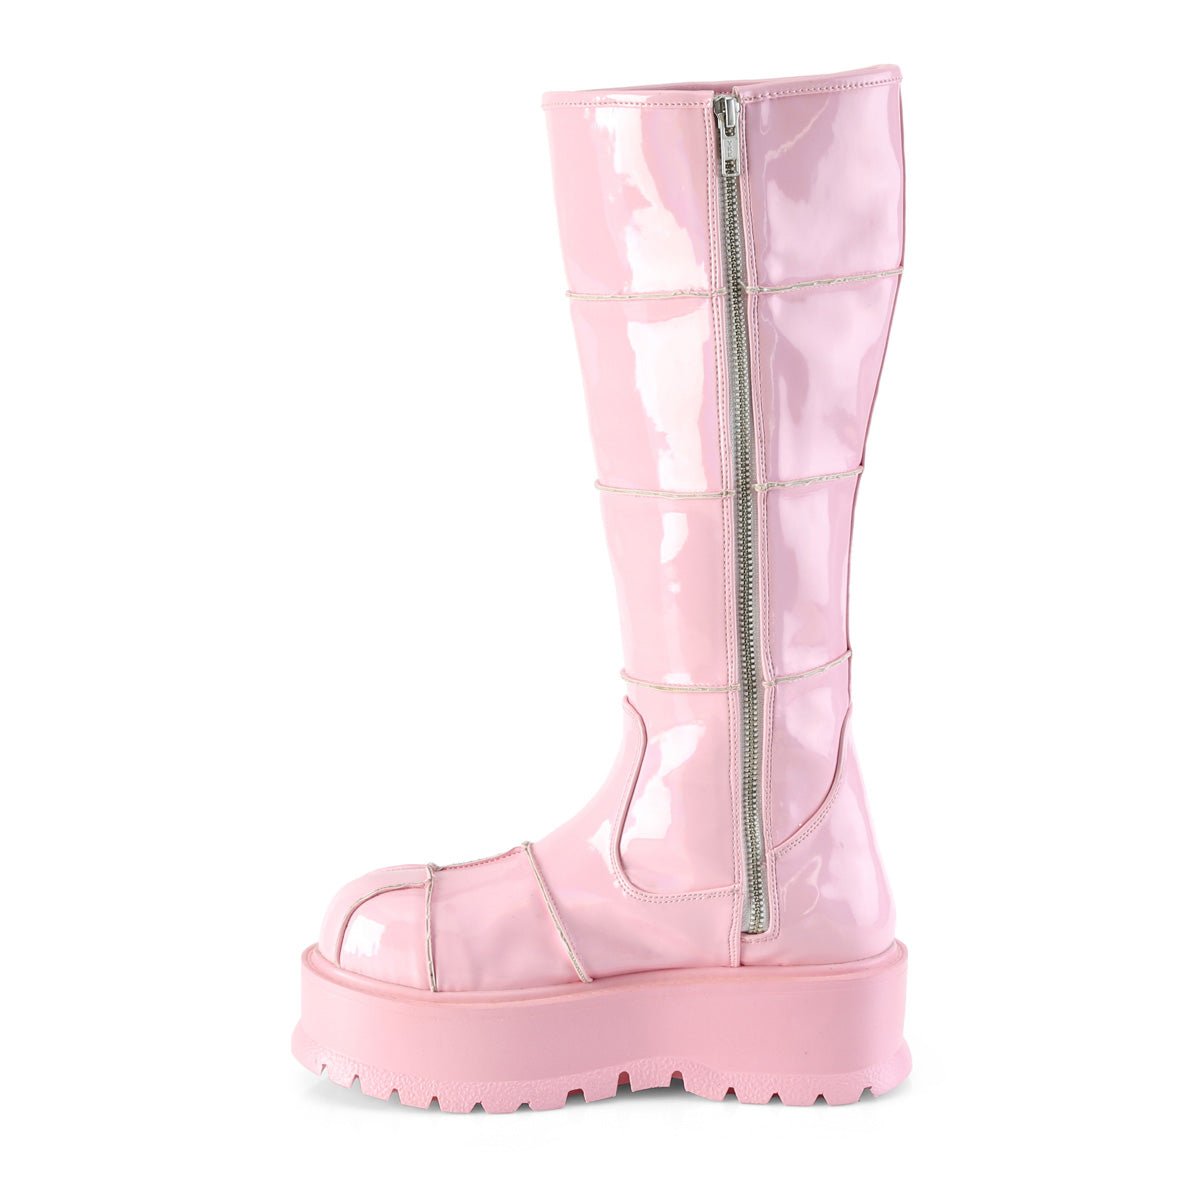 Too Fast | Demonia Slacker 230 | Baby Pink Hologram Patent Women's Knee High Boots